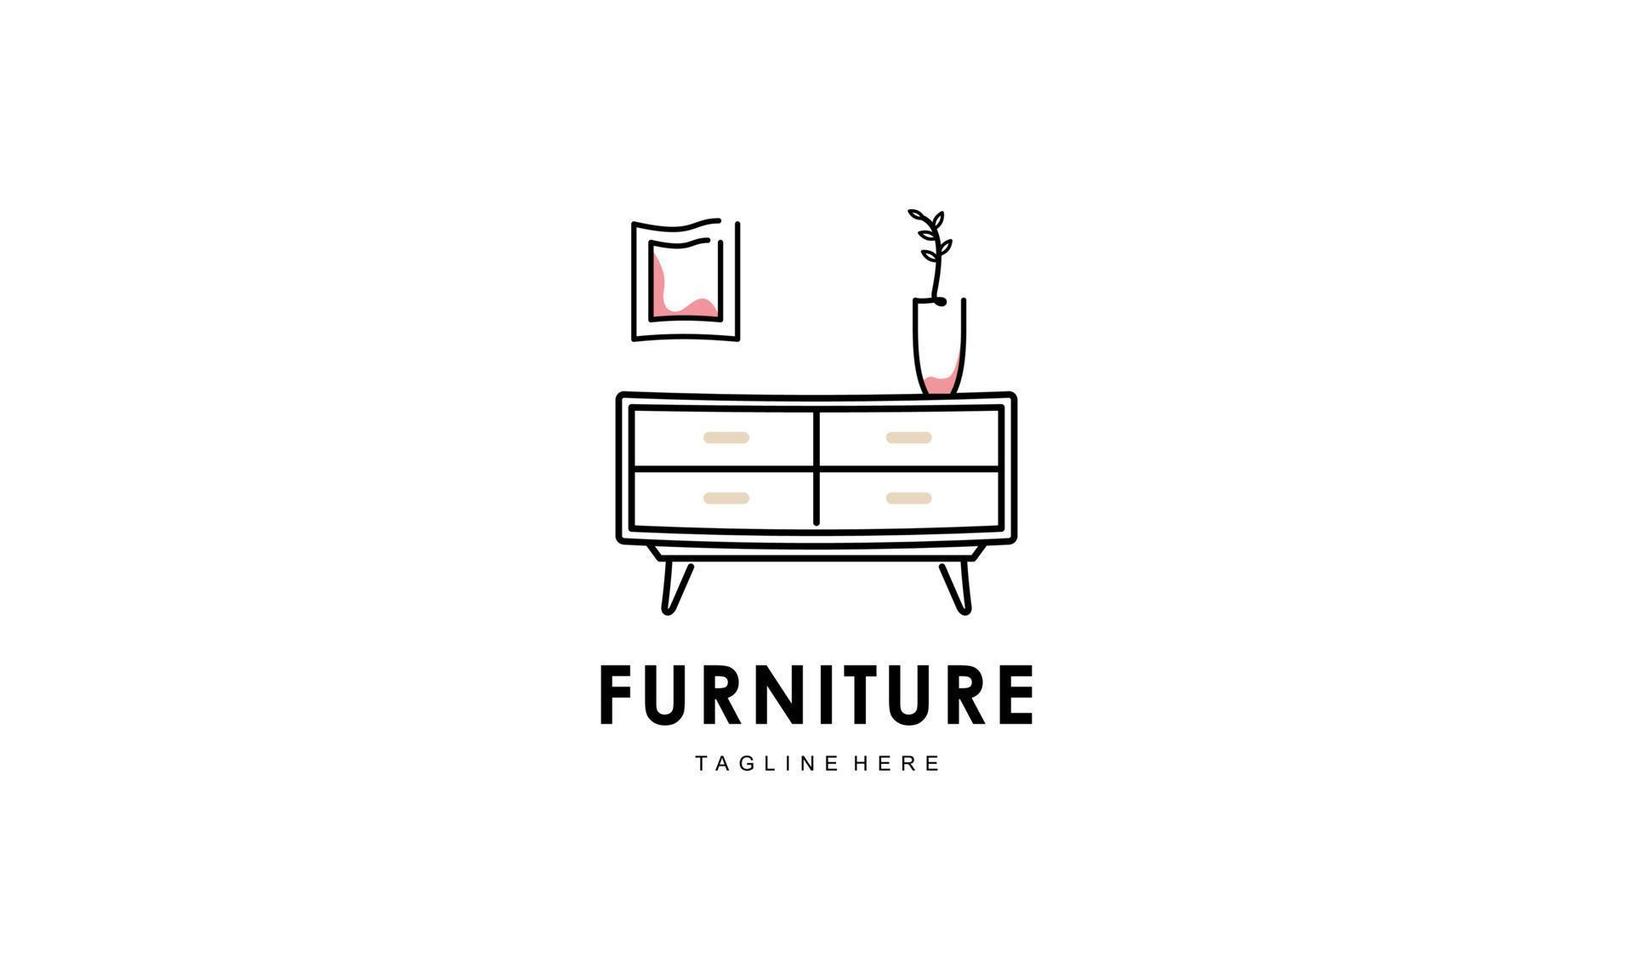 Interior minimalist room, gallery furniture logo design vector